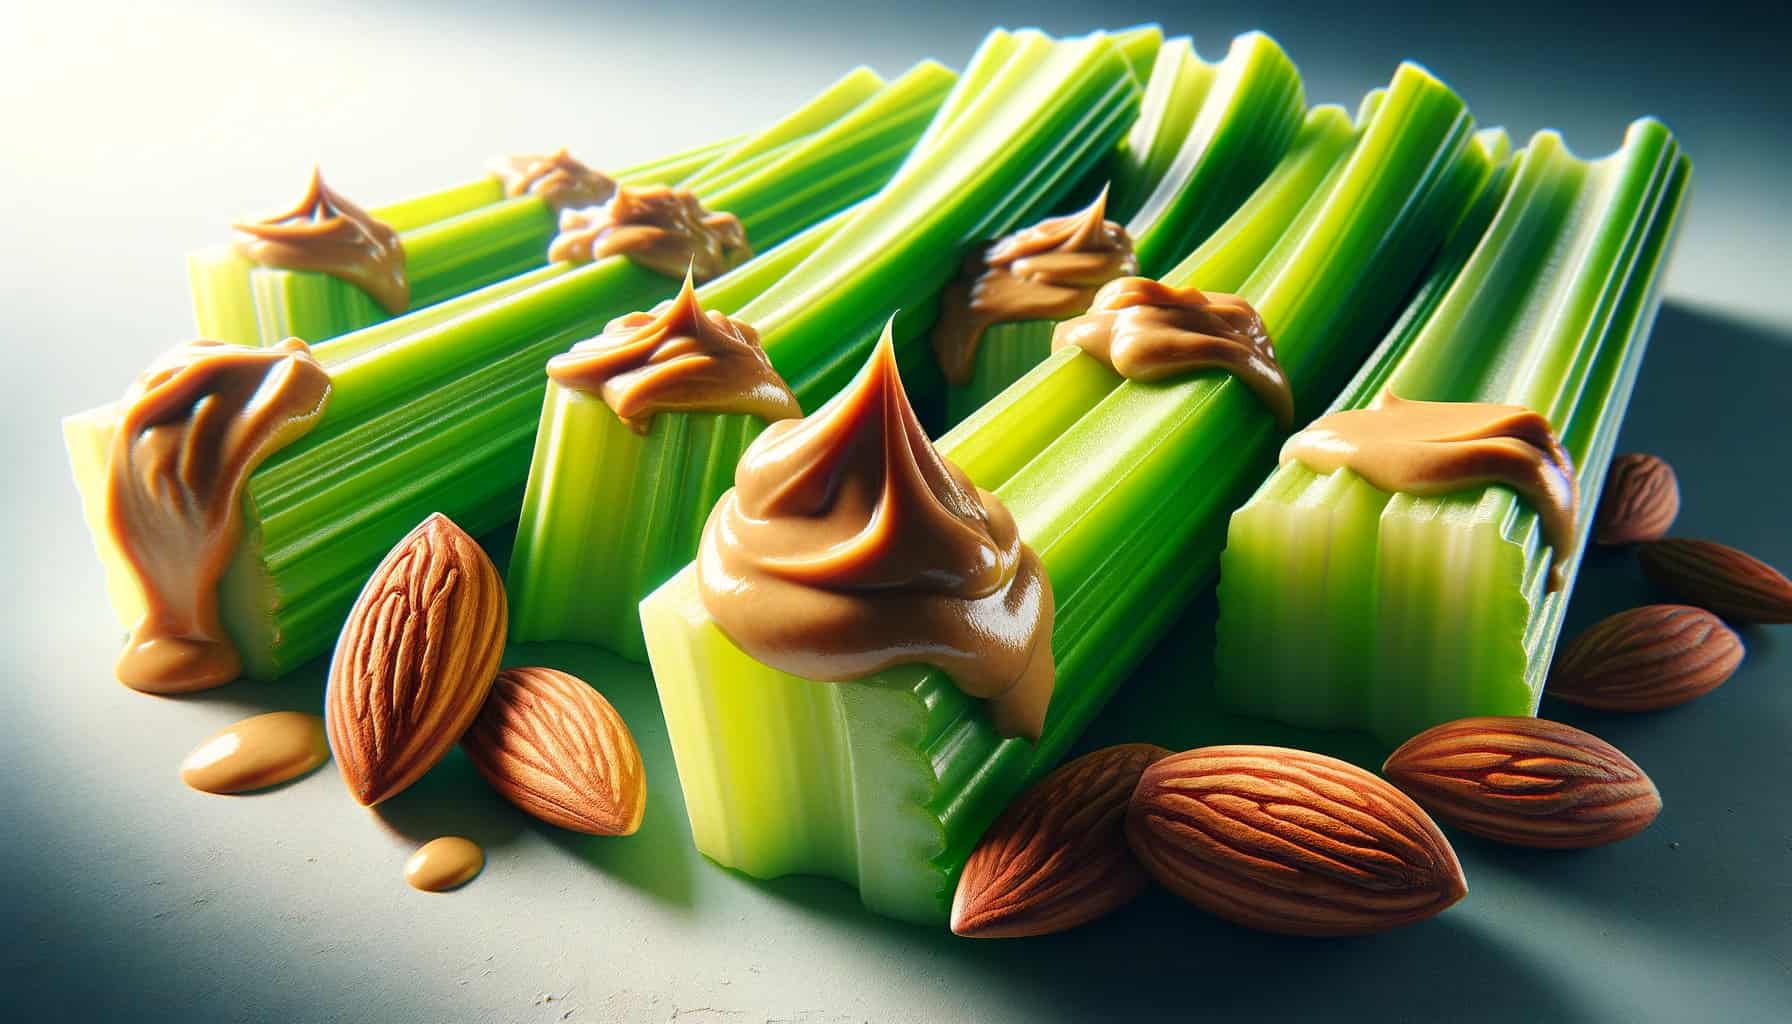 Celery sticks dipped in almond butter